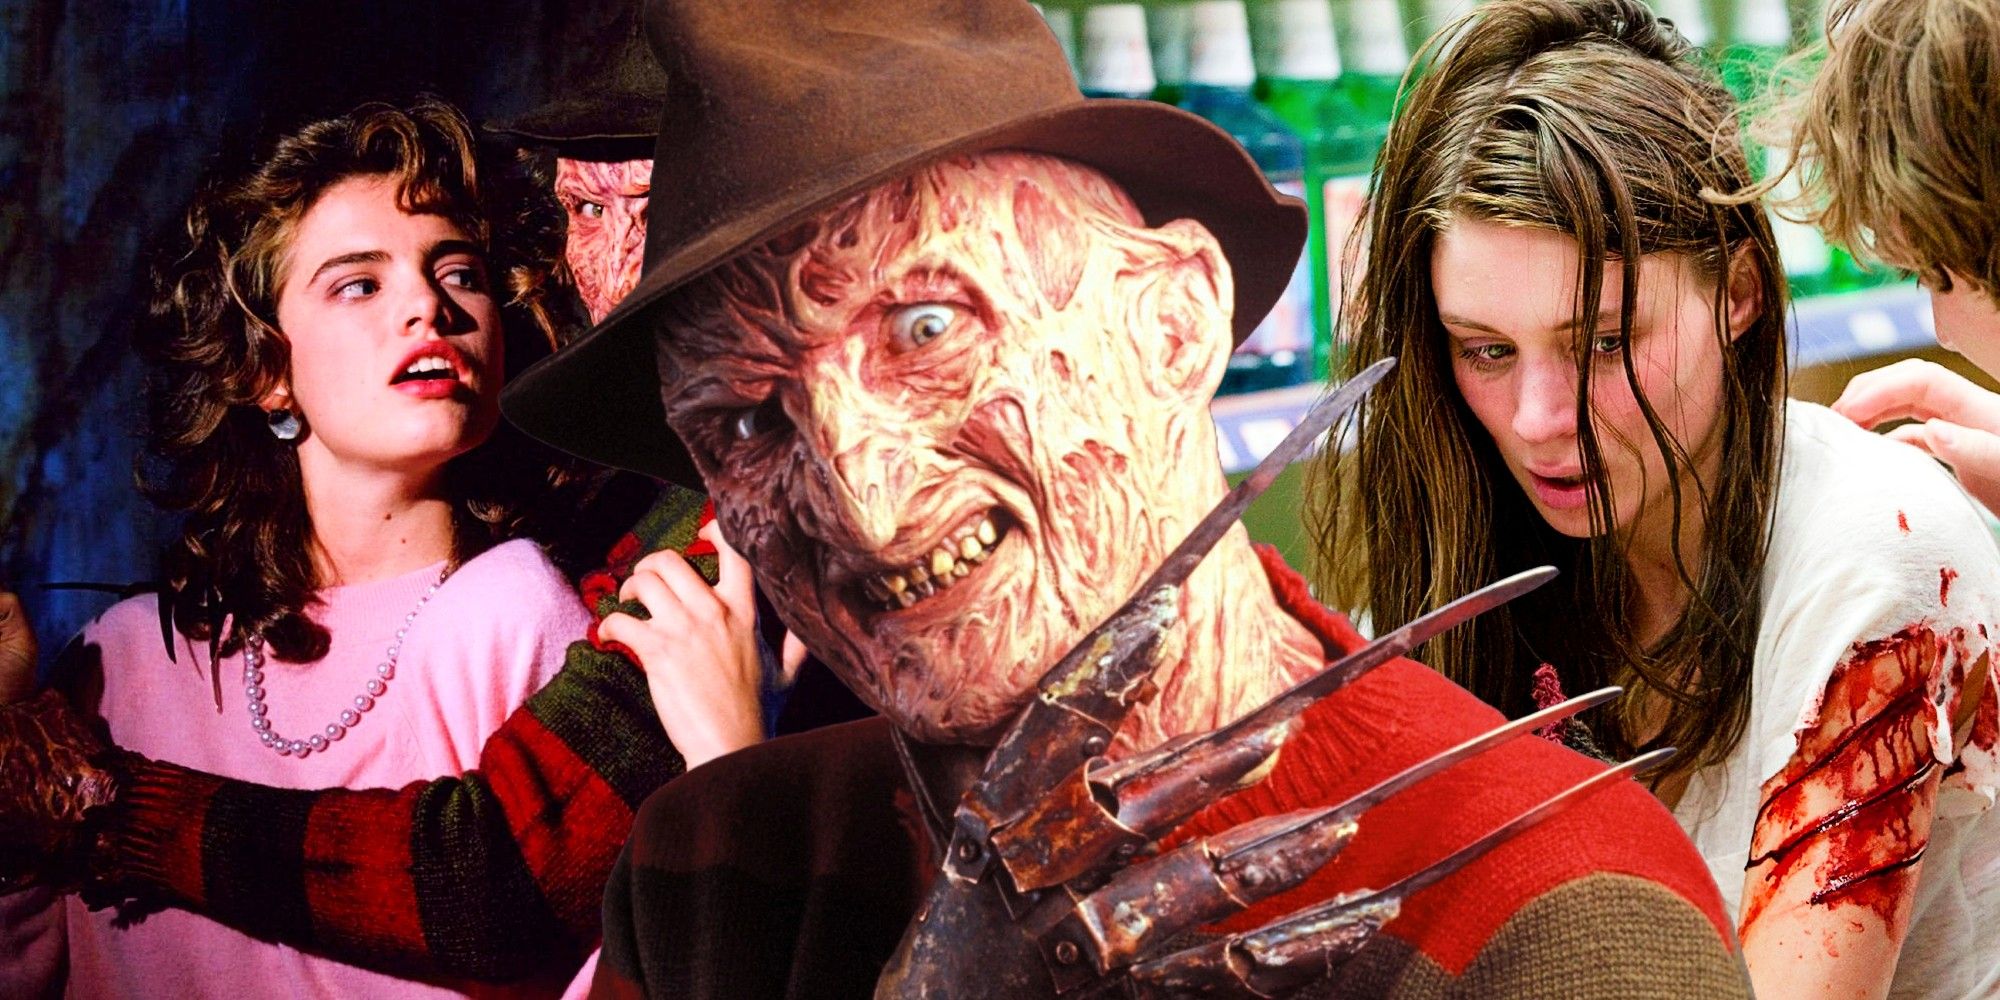 A blended image features Heather Langenkamp as Nancy, Robert Englund as Freddy Kreuger, and Rooney Mara as Nancy in the Nightmare on Elm Street movies